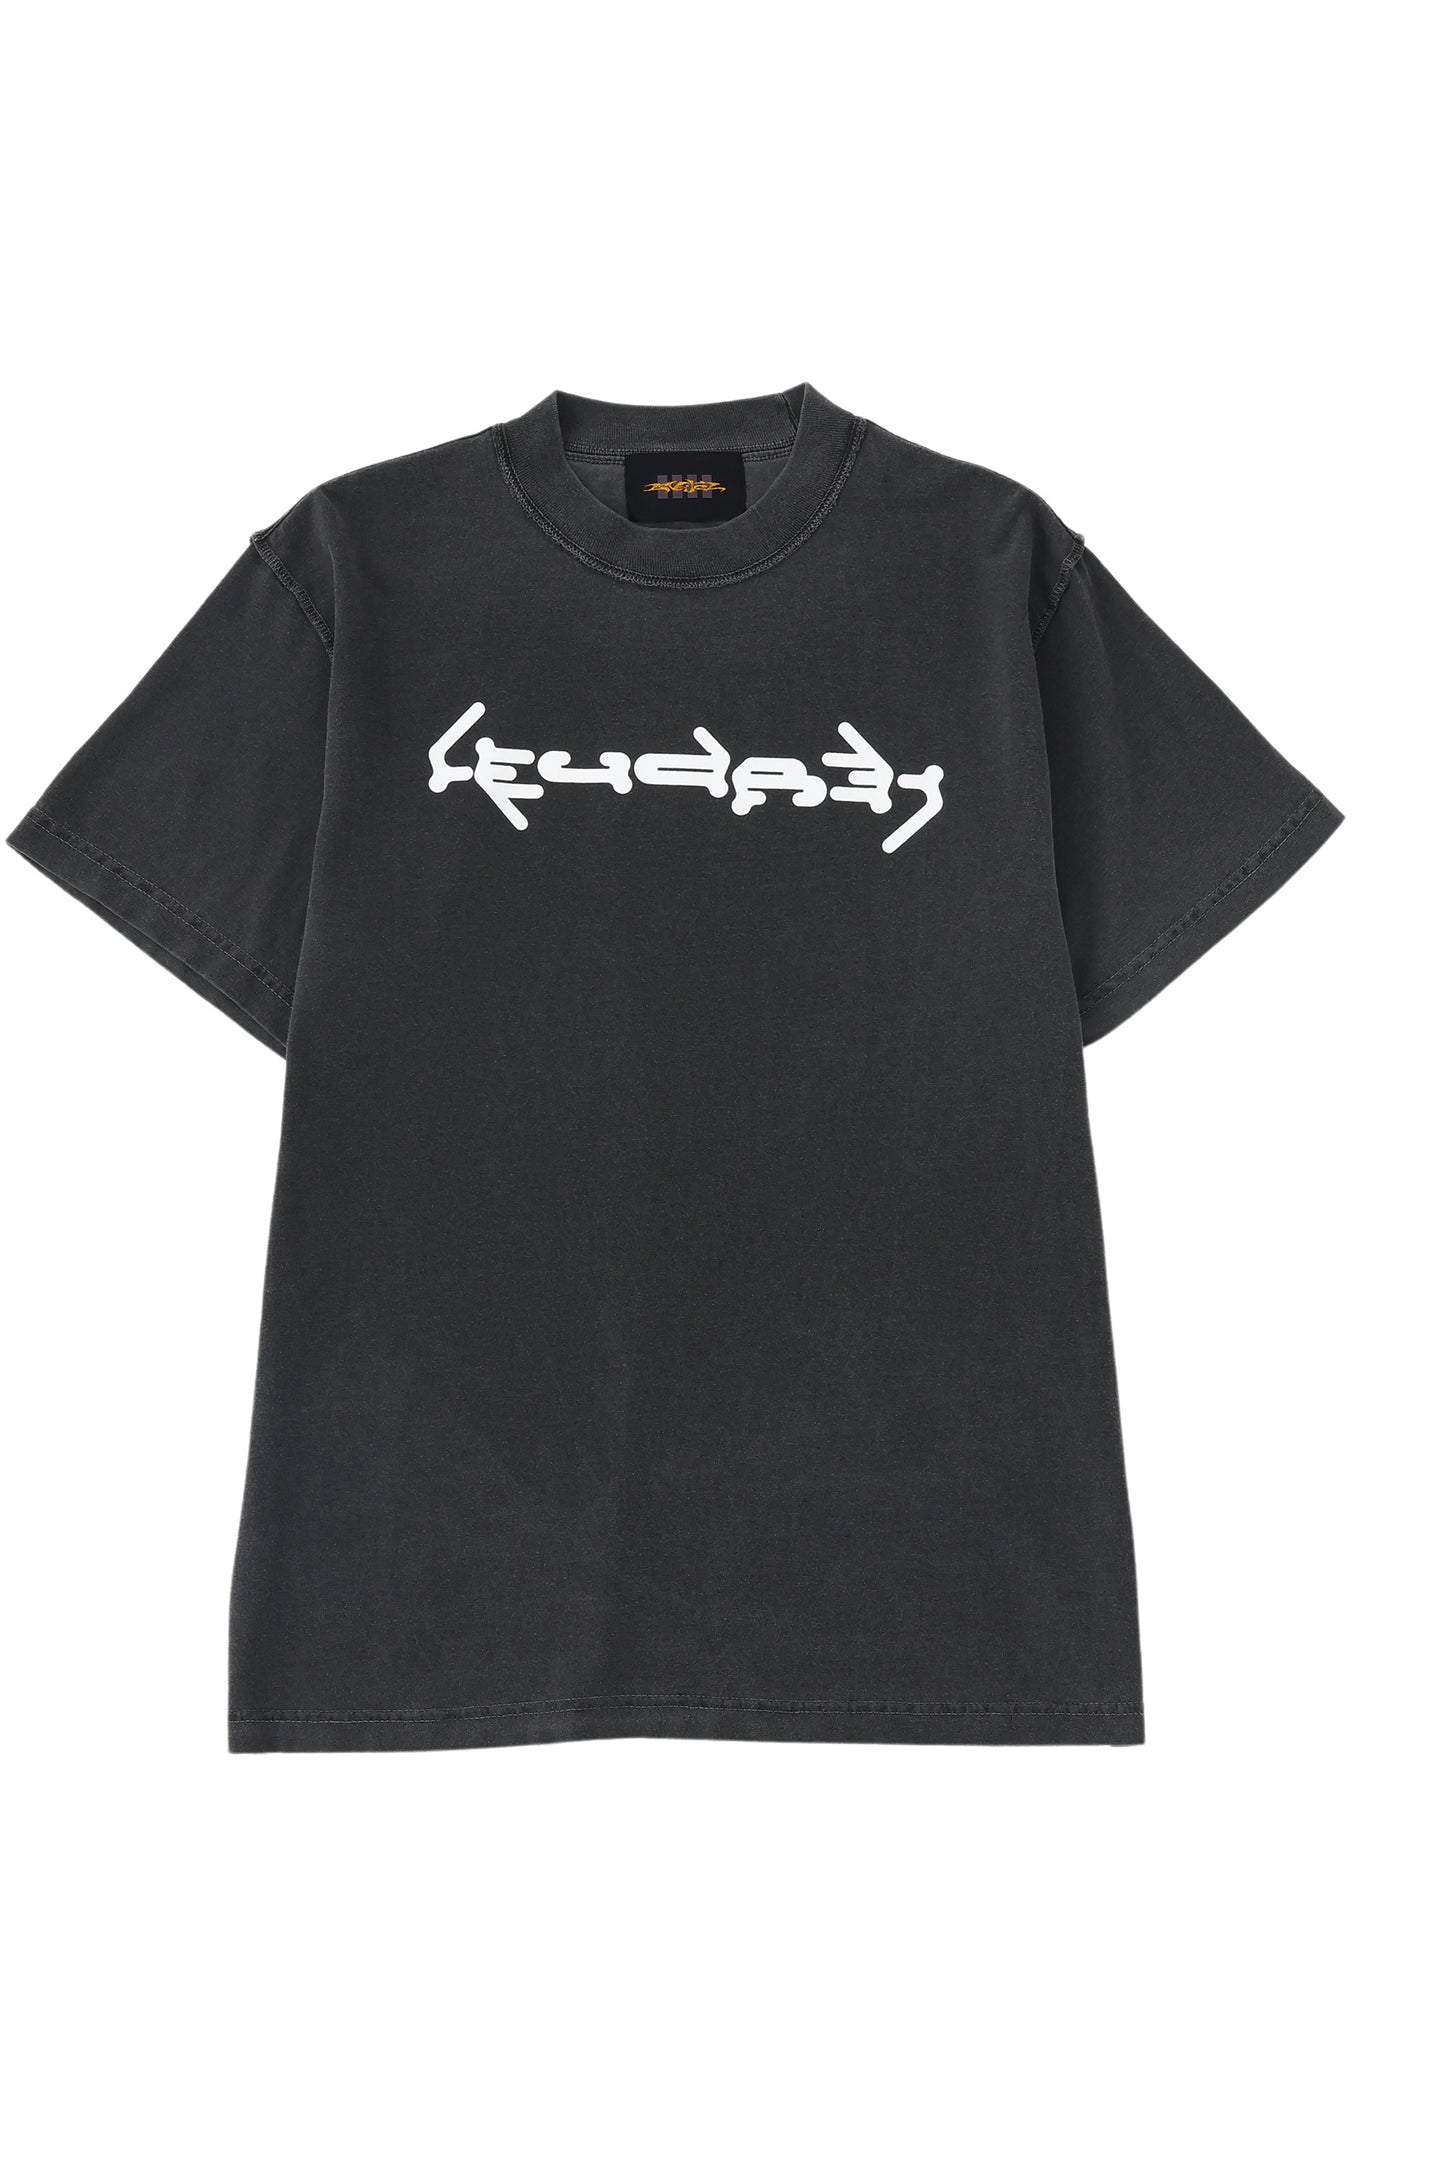 "ANCIENT LOGO" S/S T-shirt［SHADOW］